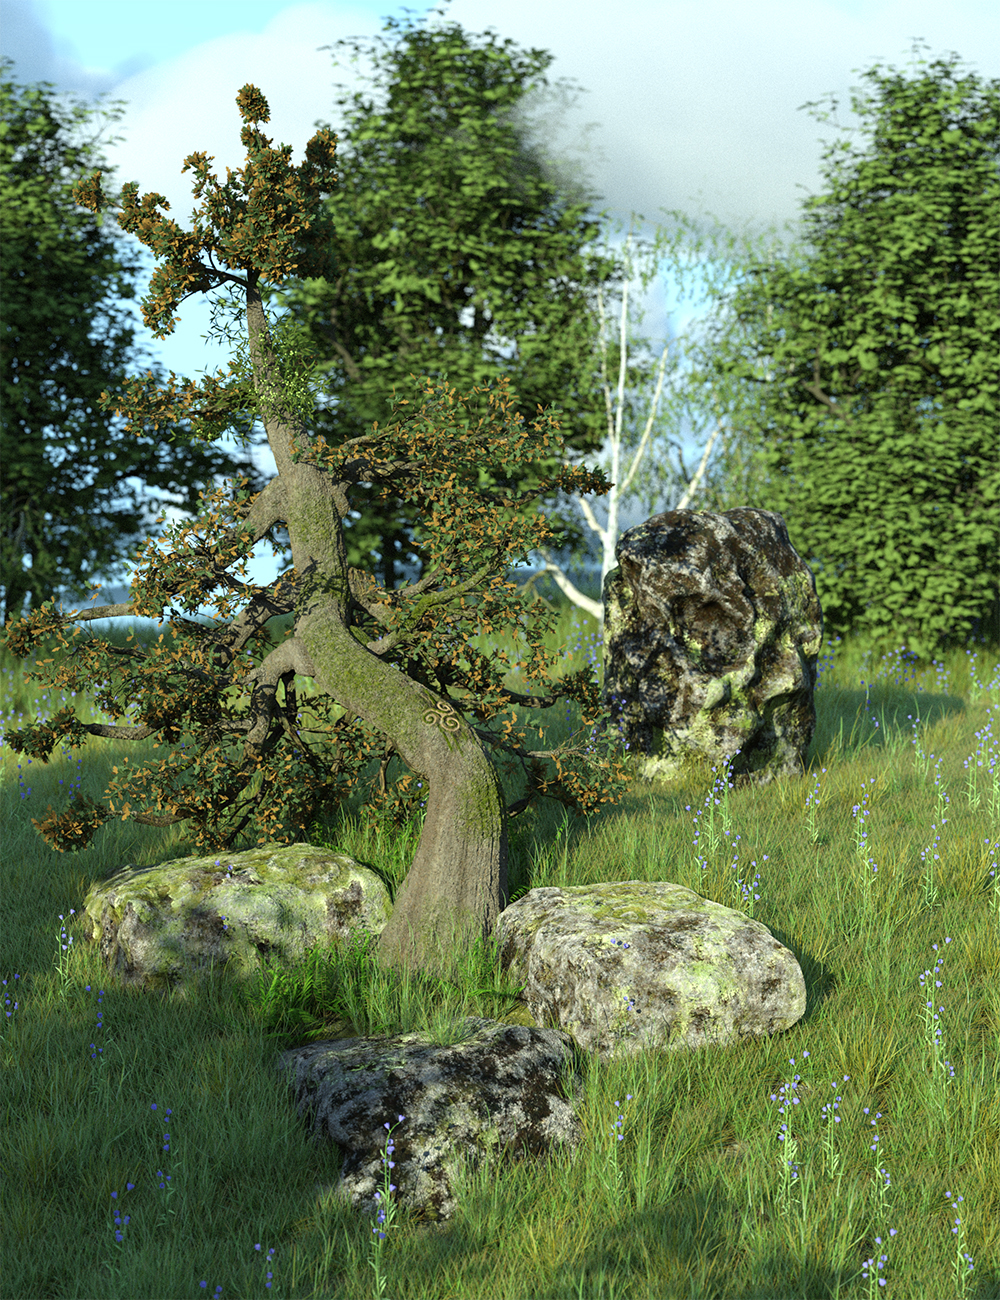 The Druids Grove - A Mystical Scene by: MartinJFrost, 3D Models by Daz 3D